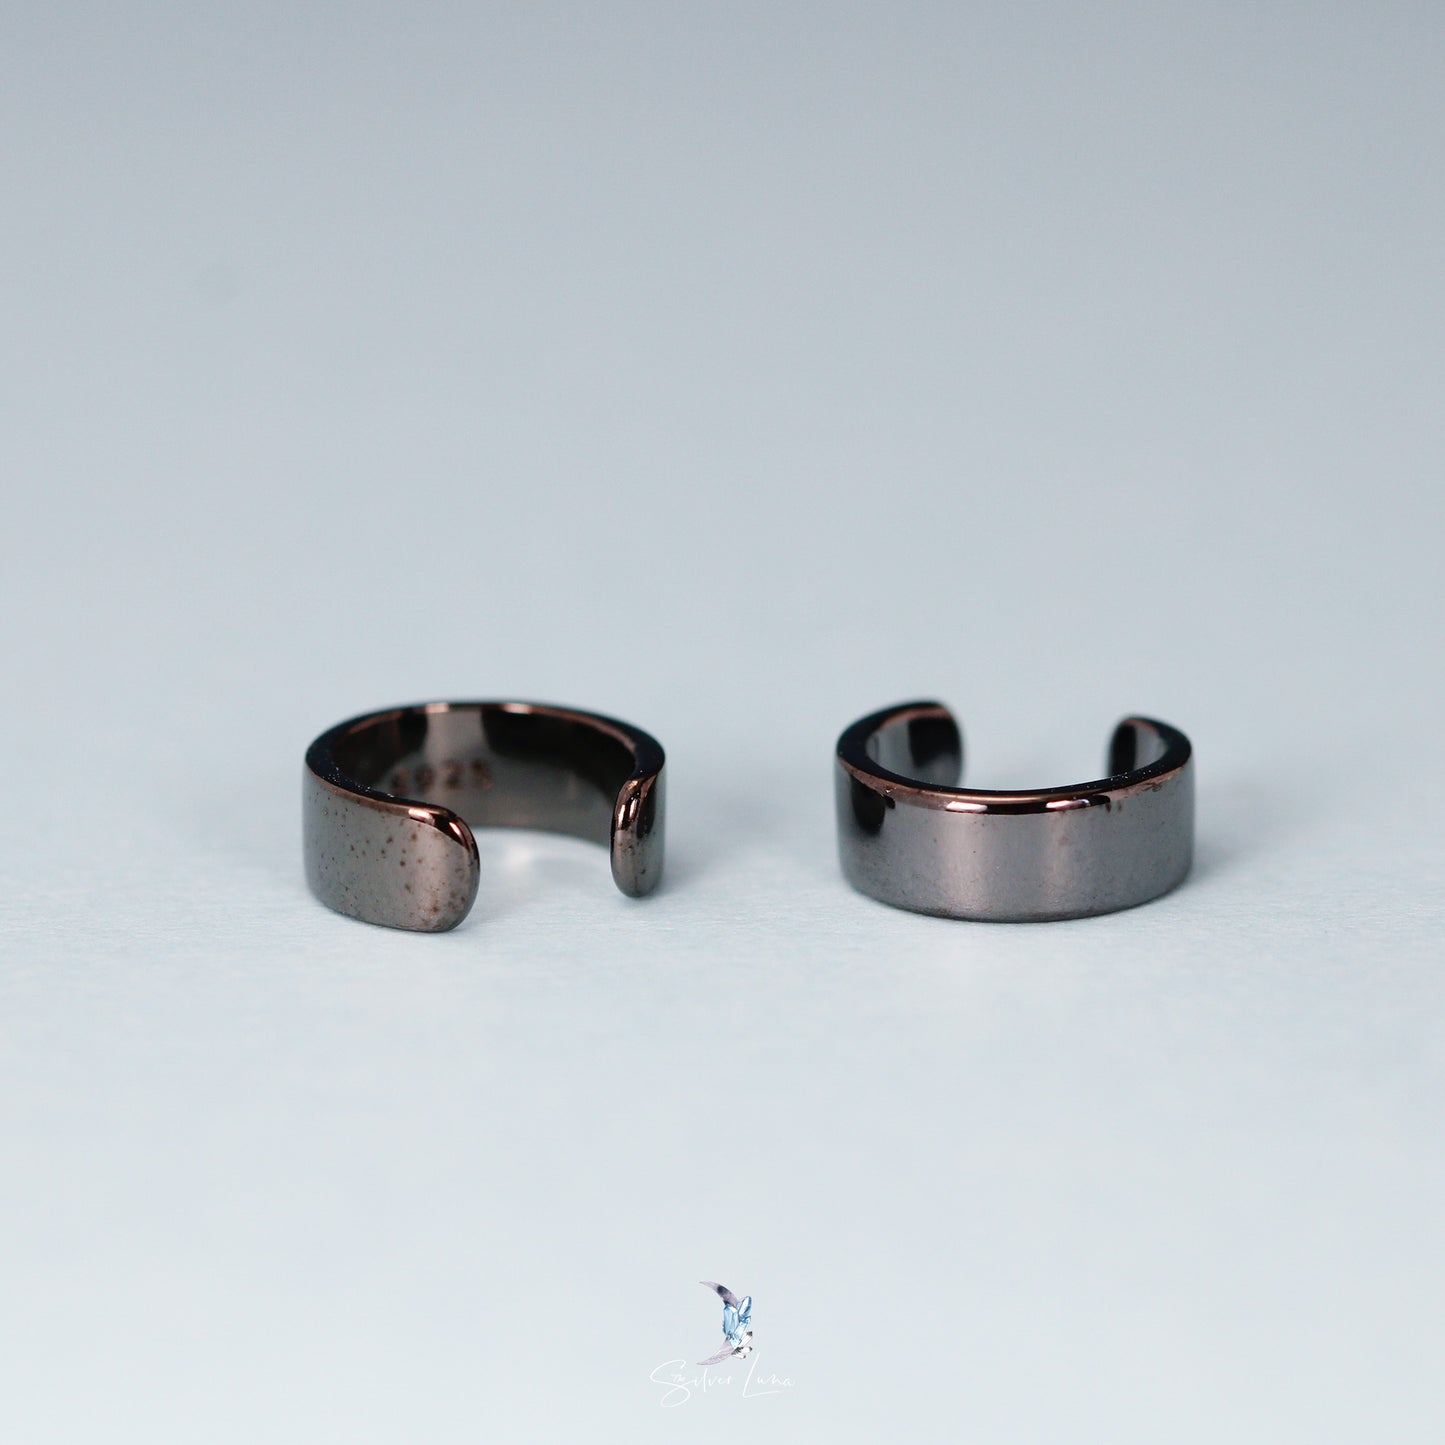 Minimalist big band simple ear cuffs in sterling silver